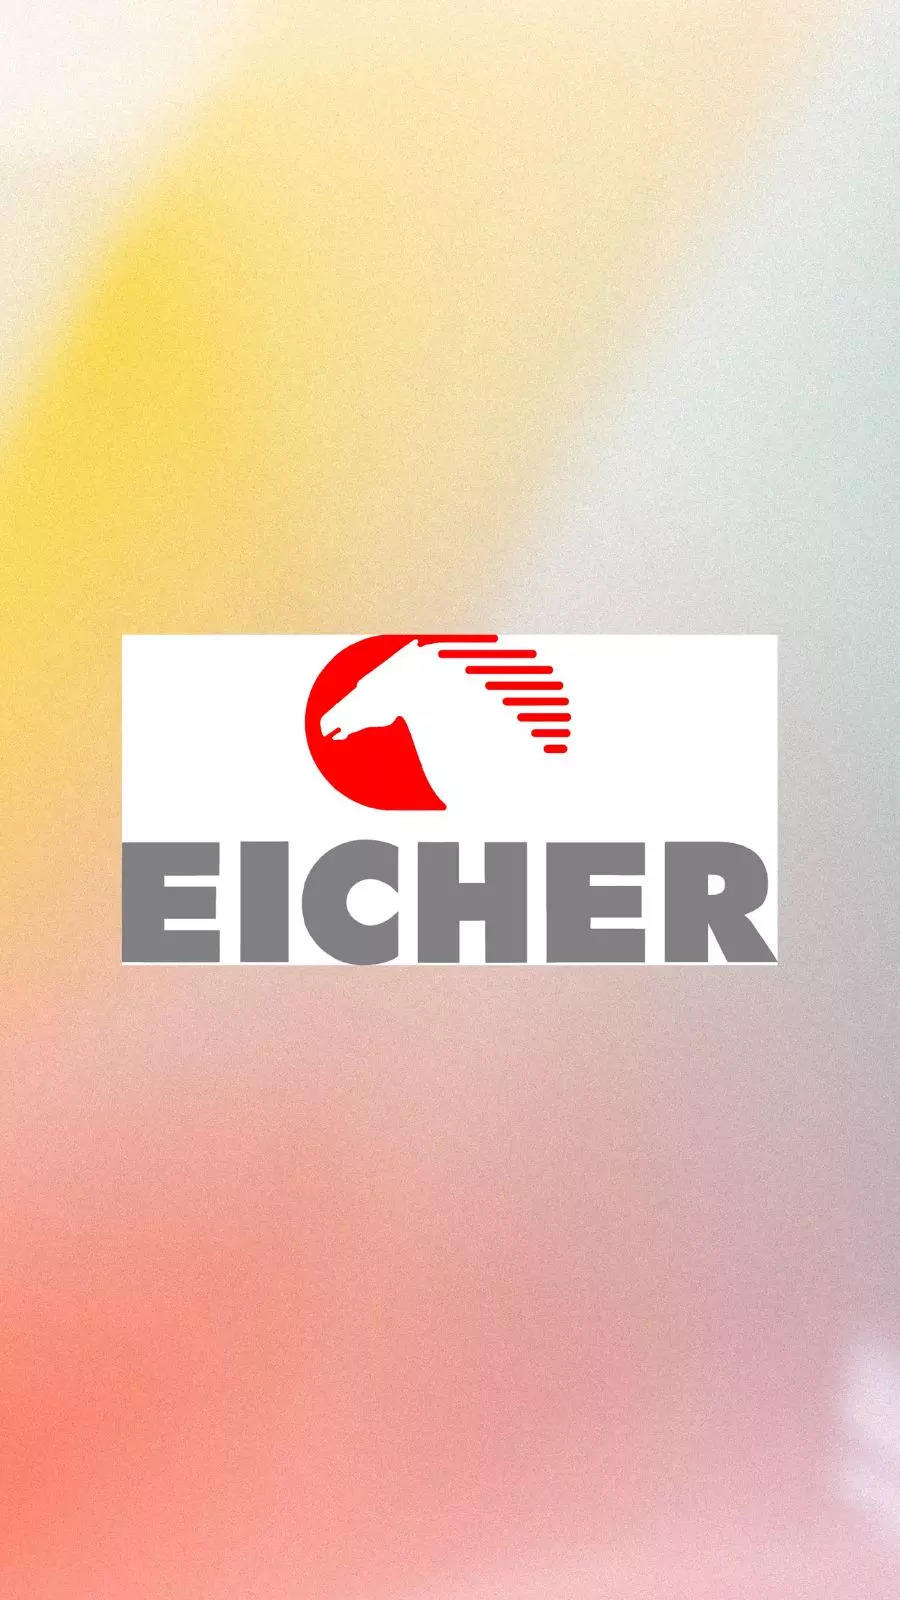 Eicher 7 speed truck game by Tara Singh on Dribbble